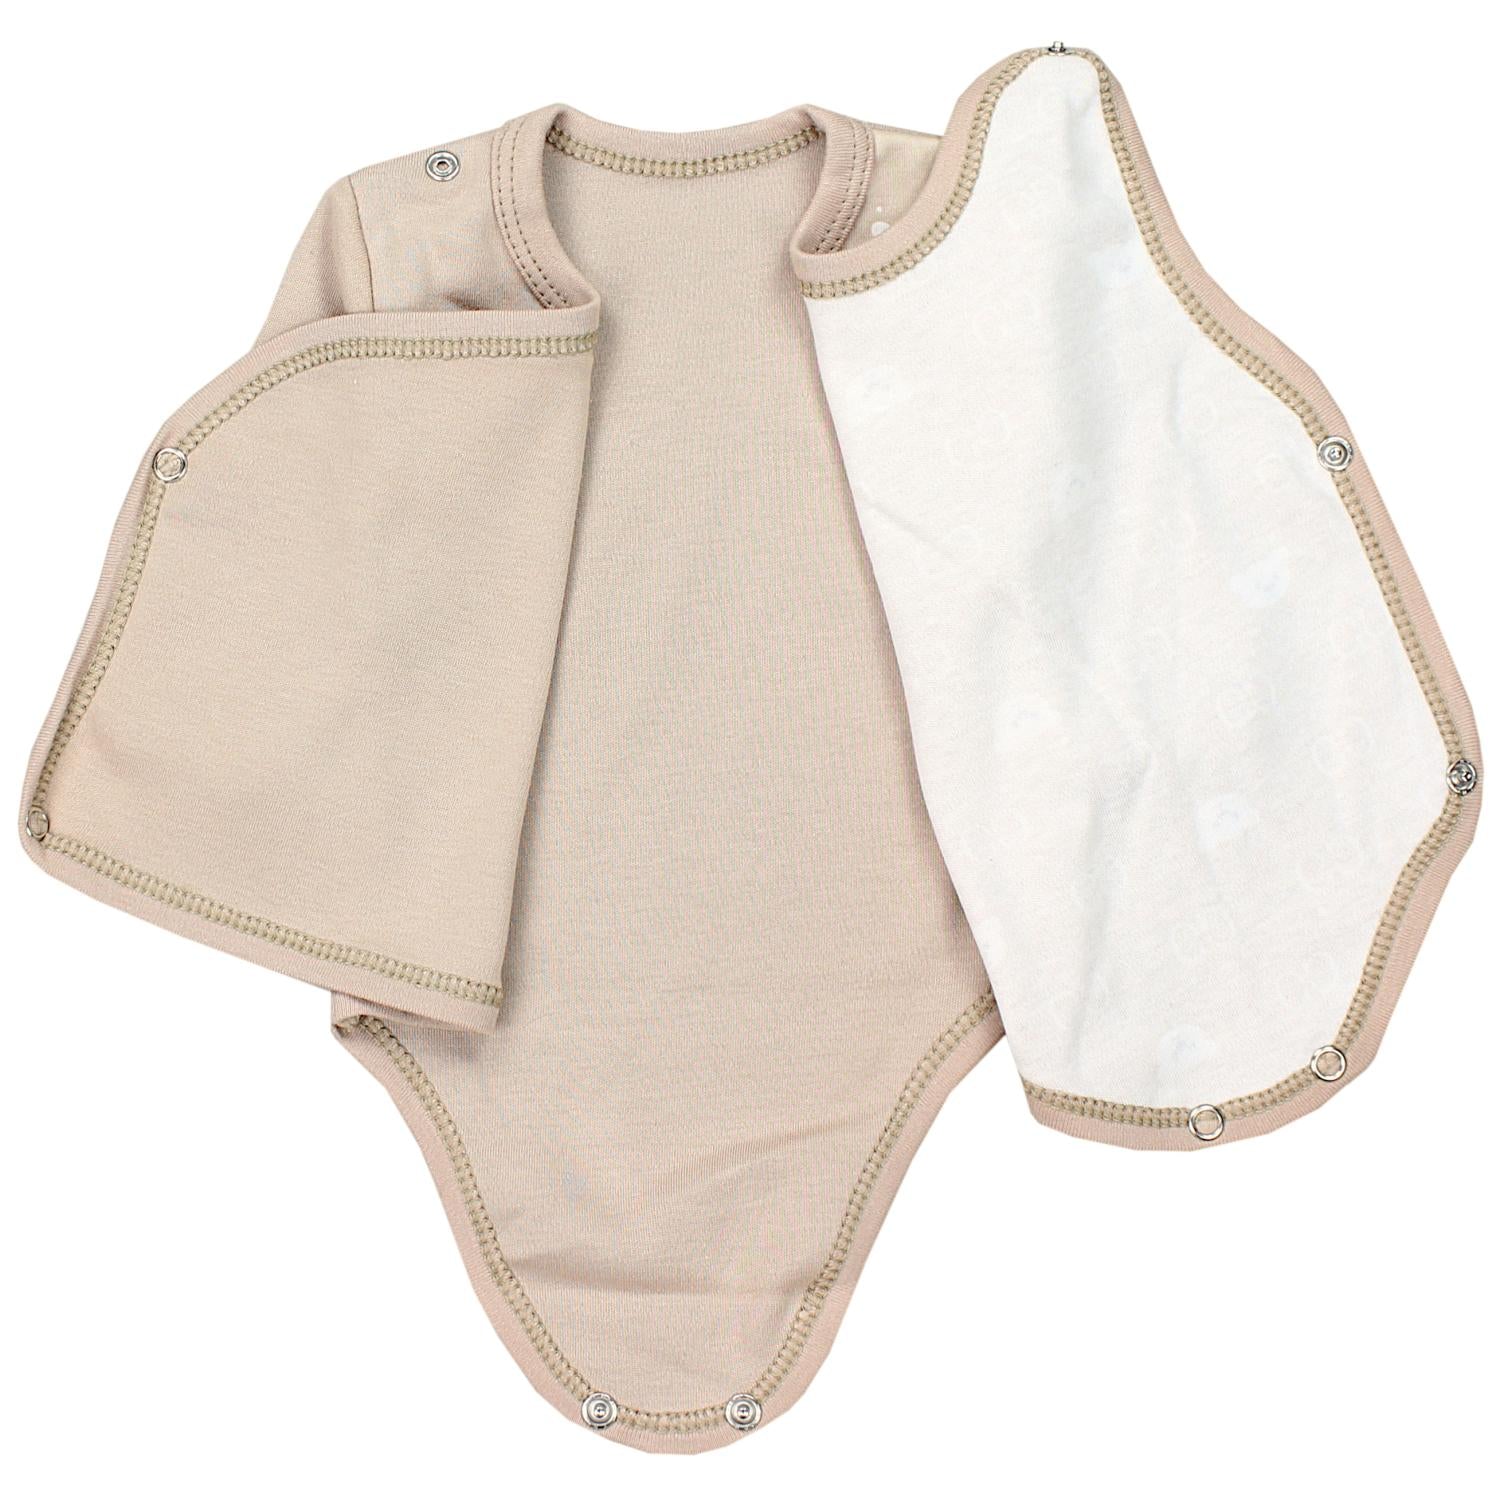 Baby Kleidung Set (5-teilig)